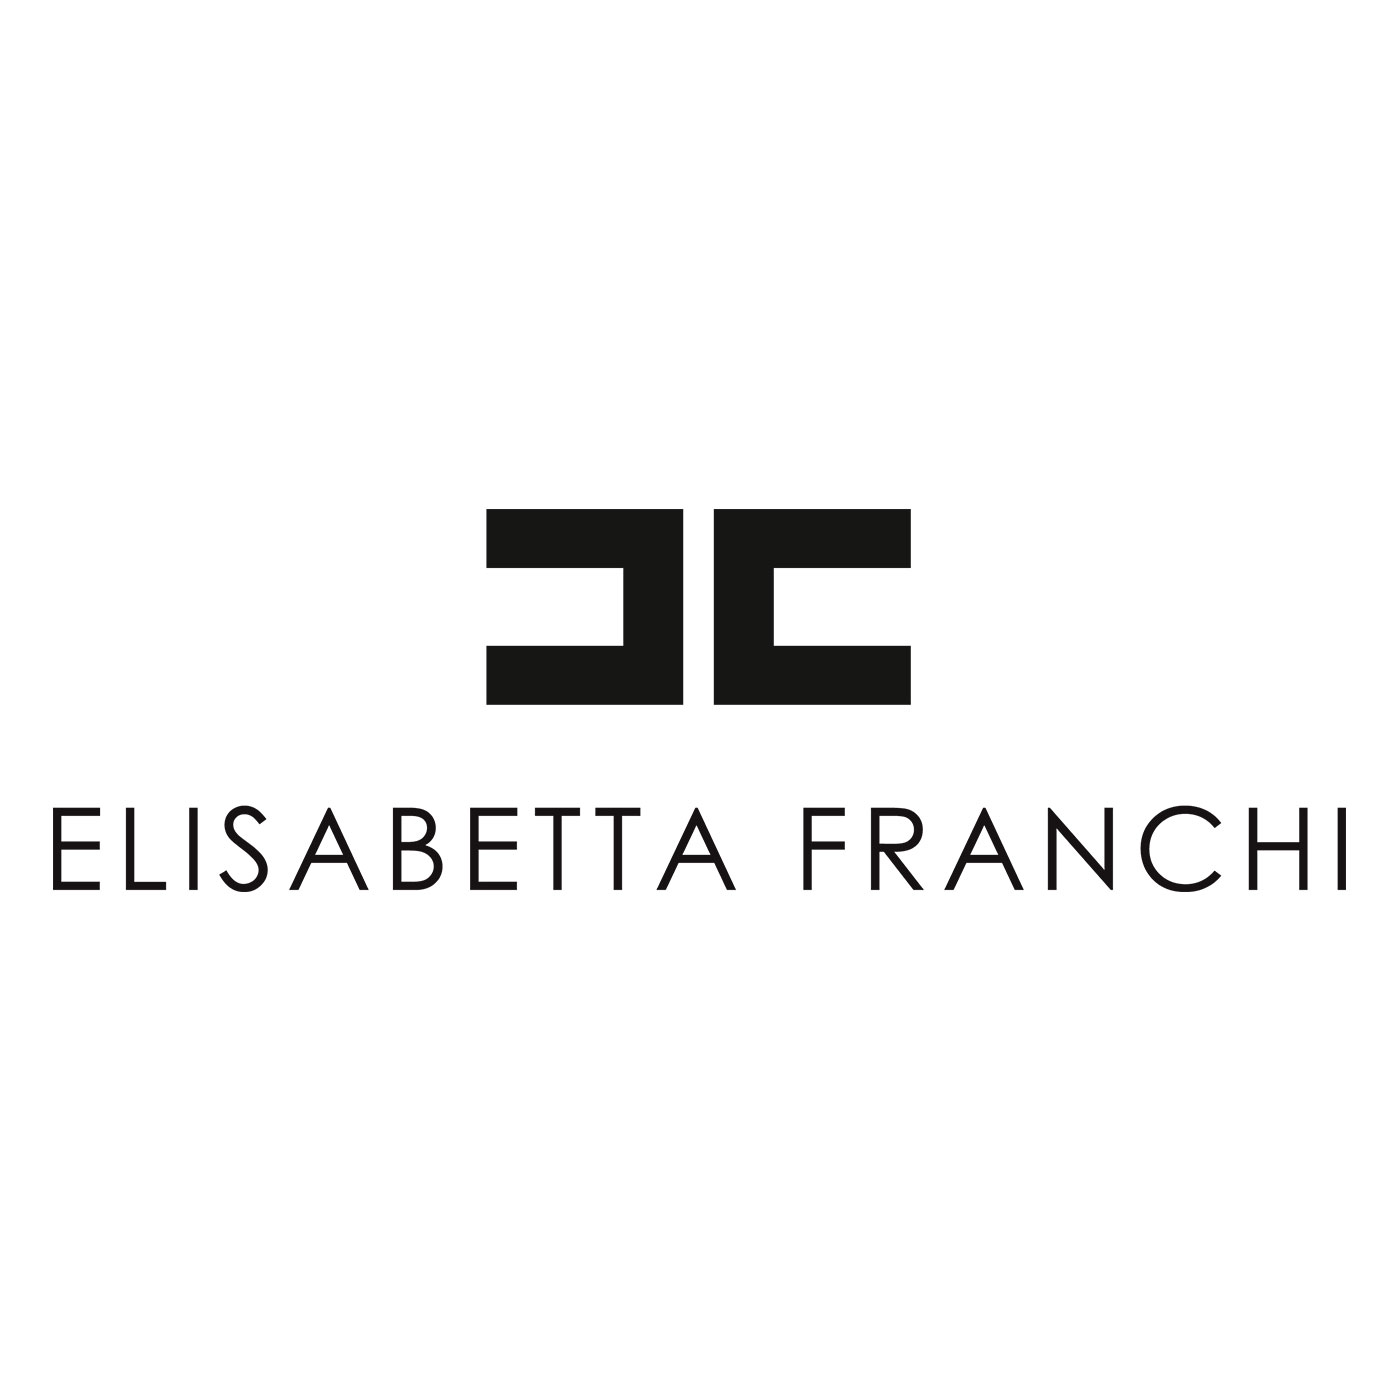 ELISABETTA FRANCHI